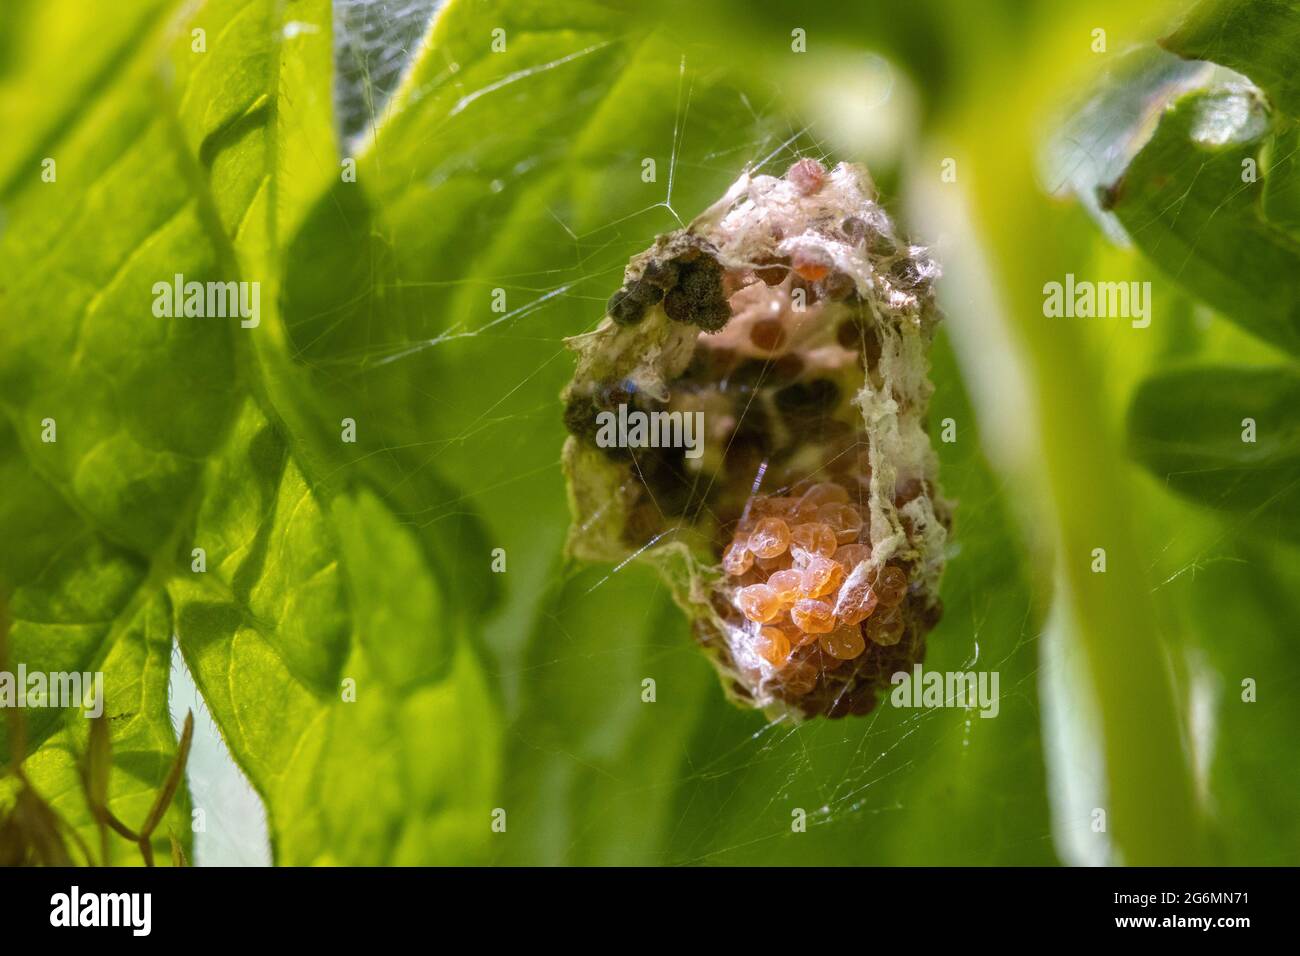 UK wildlife: Empty egg sac full of hatched eggs from a nursery web spider (Pisaura mirabilis) Stock Photo